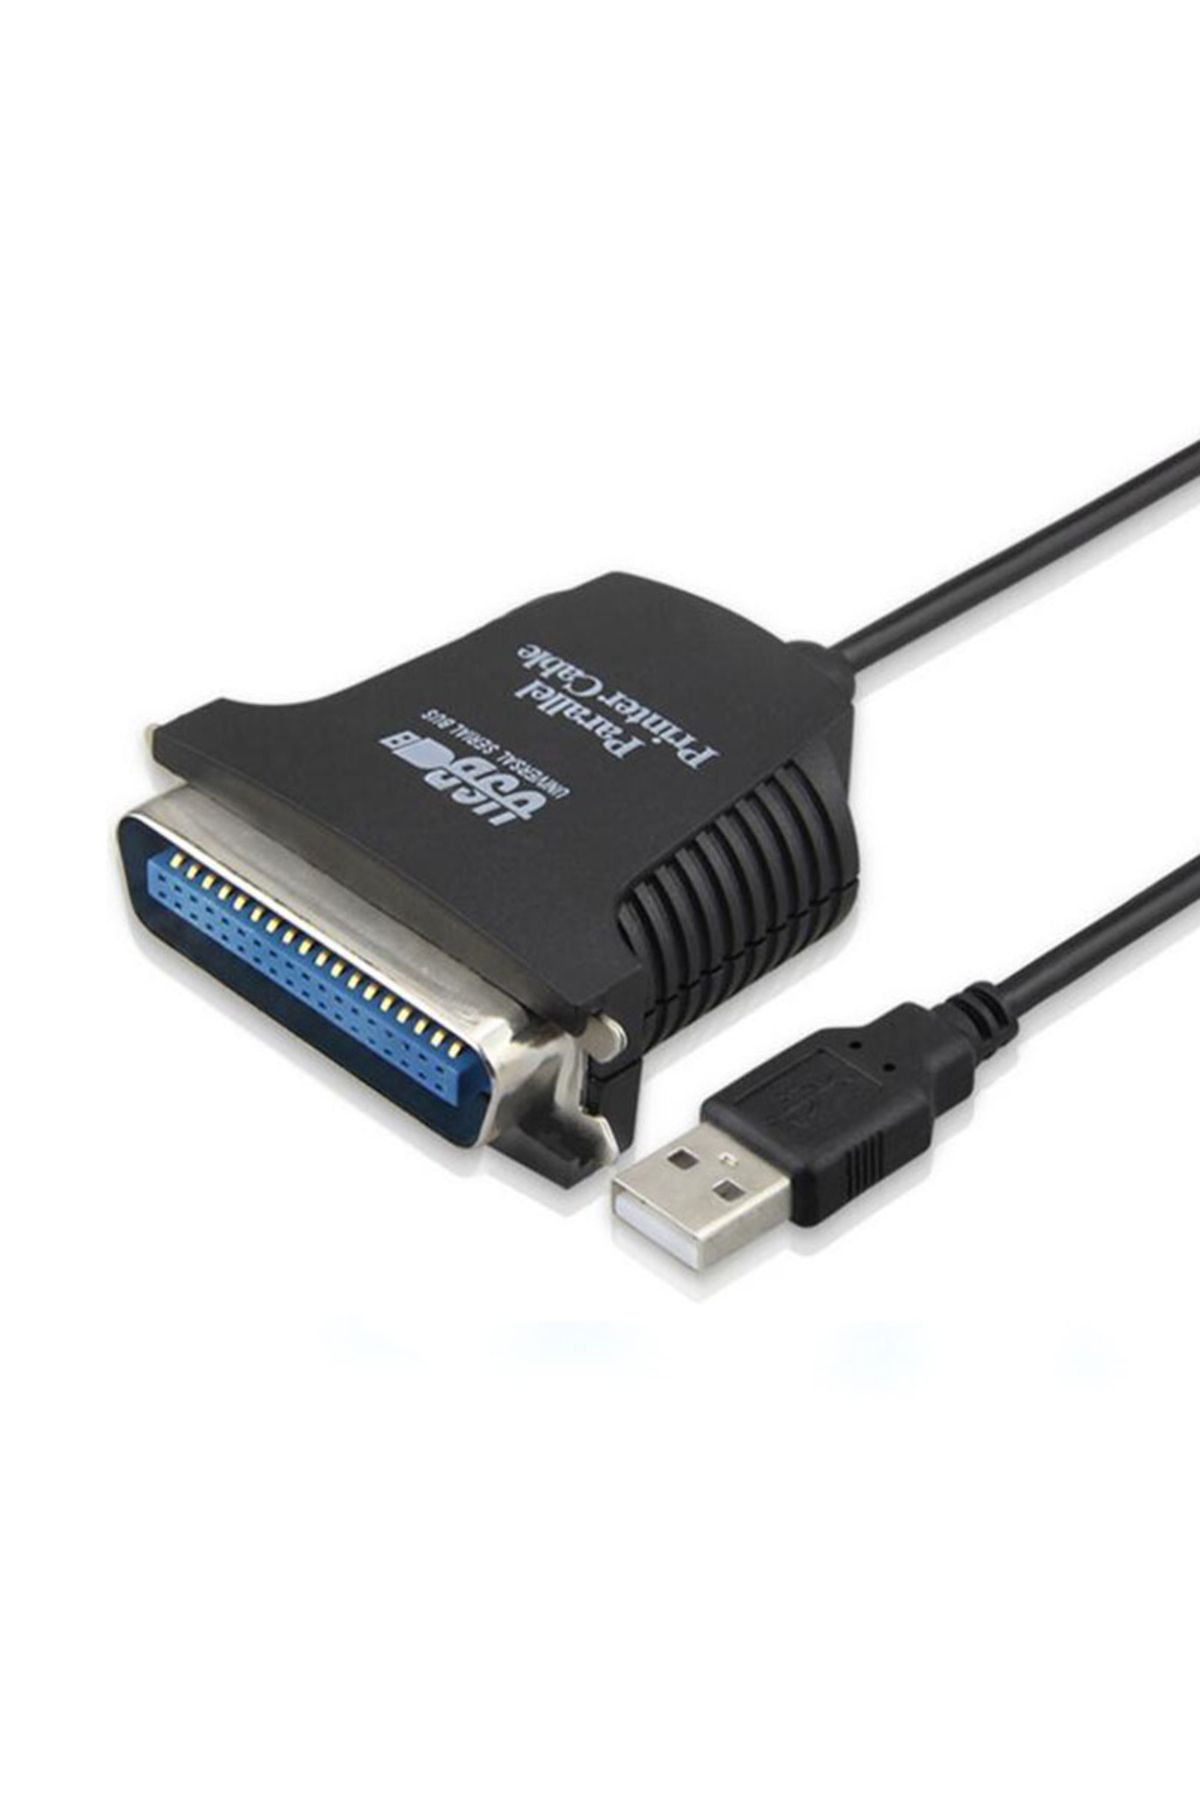 Genel Markalar Usb 2.0 To 1284 Prınter Kablo 1.5 Metre (USB-LPT) (4209)